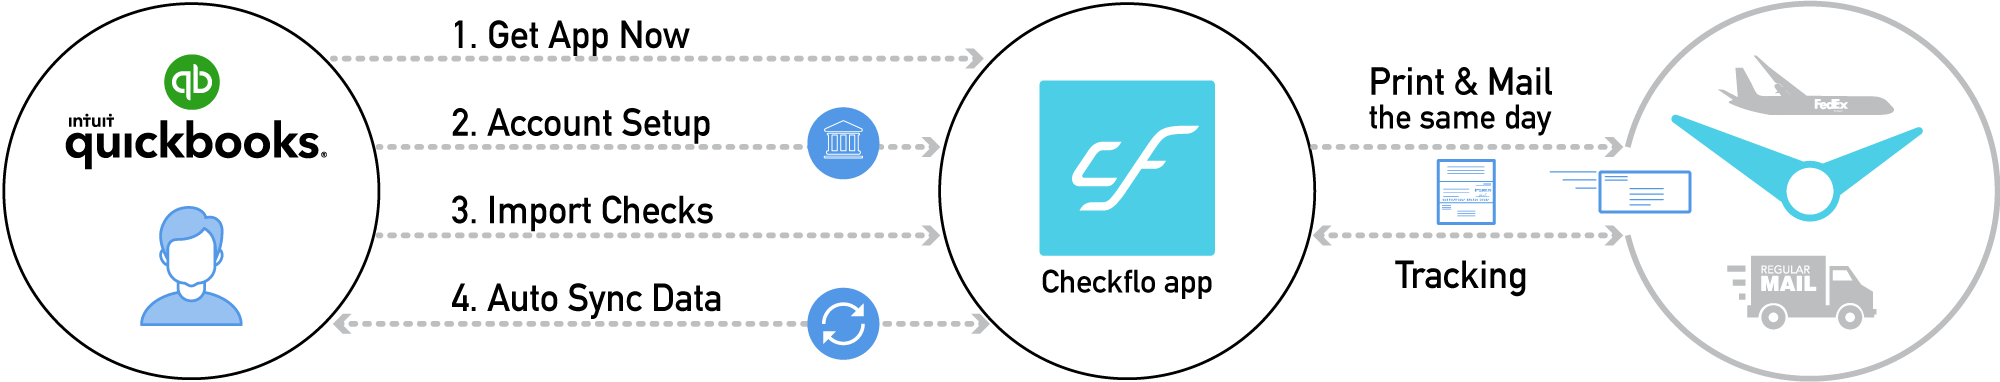 Checkflo App integration with QuickBooks